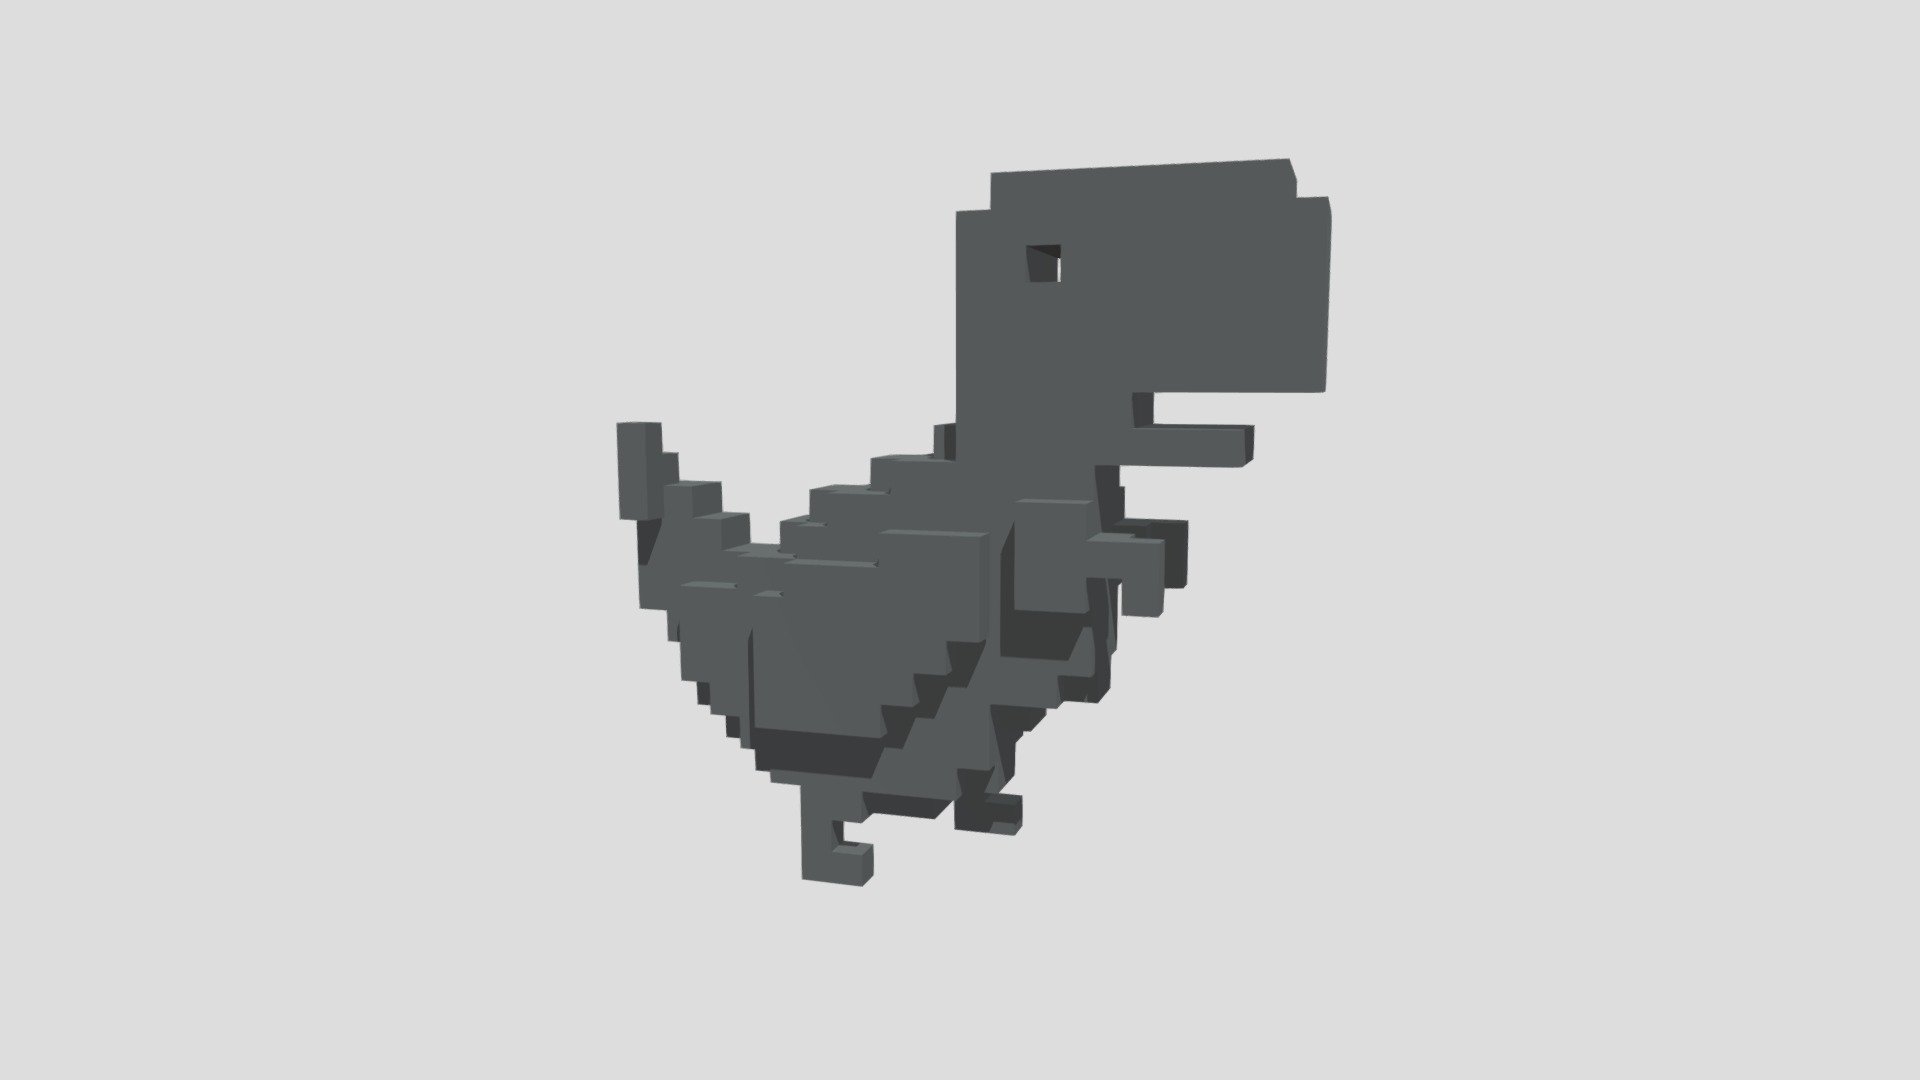 The google chrome no internet-dinosaur 3d model. Free download.